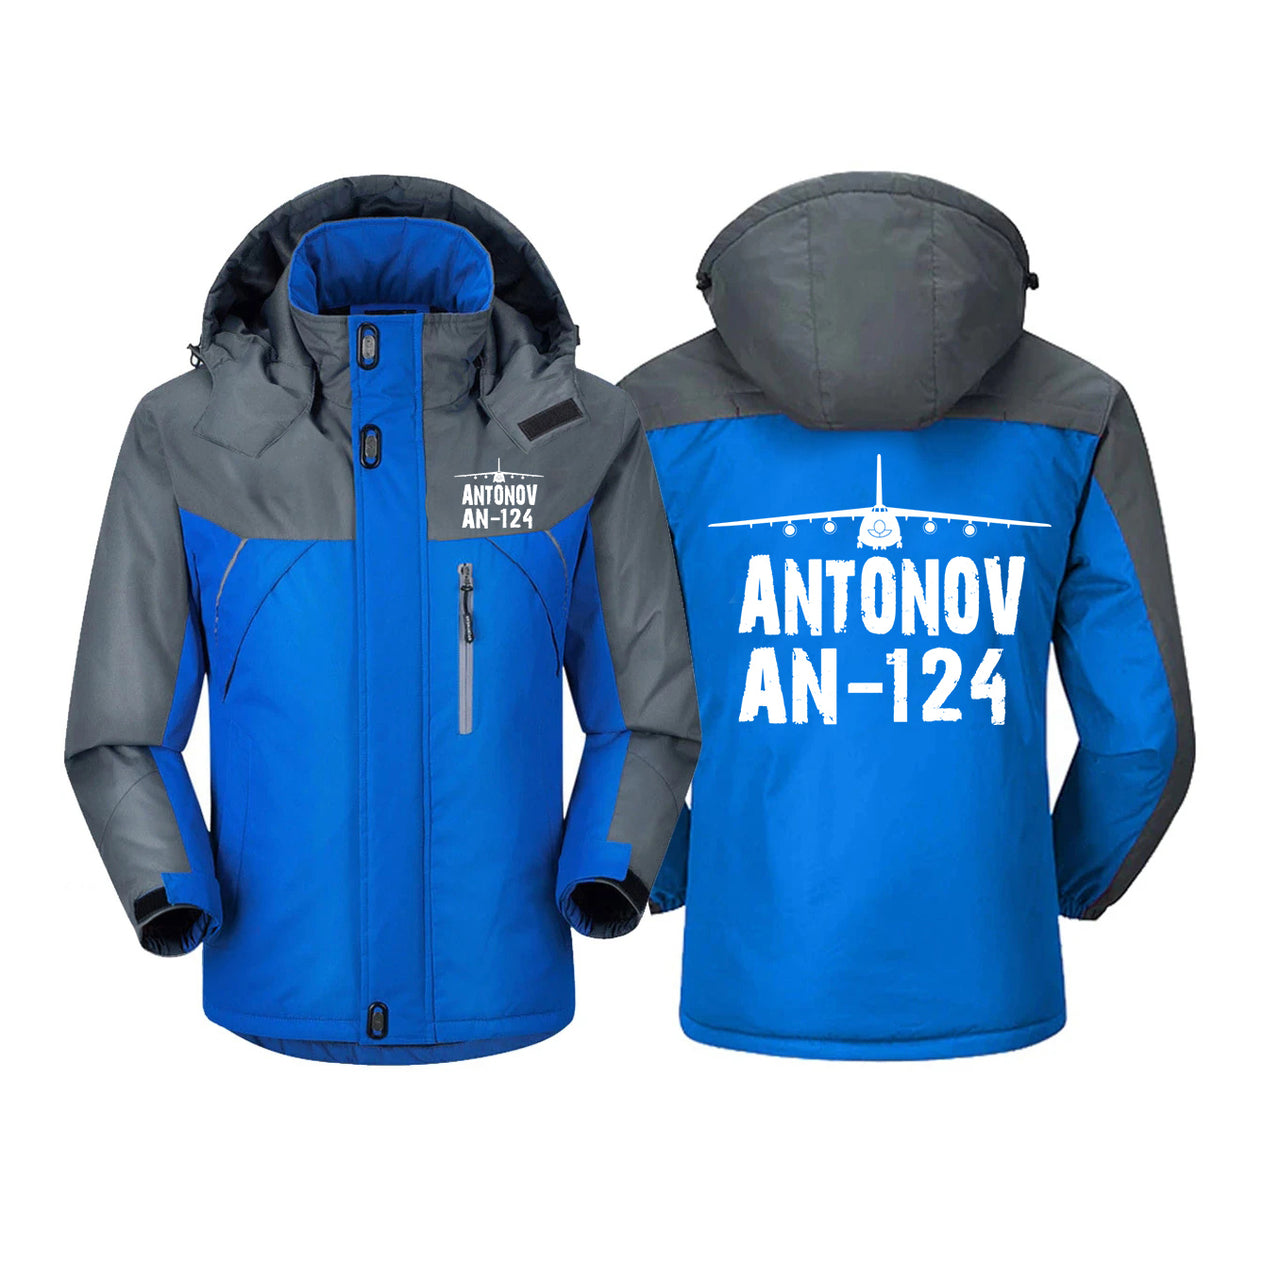 Antonov AN-124 & Plane Designed Thick Winter Jackets